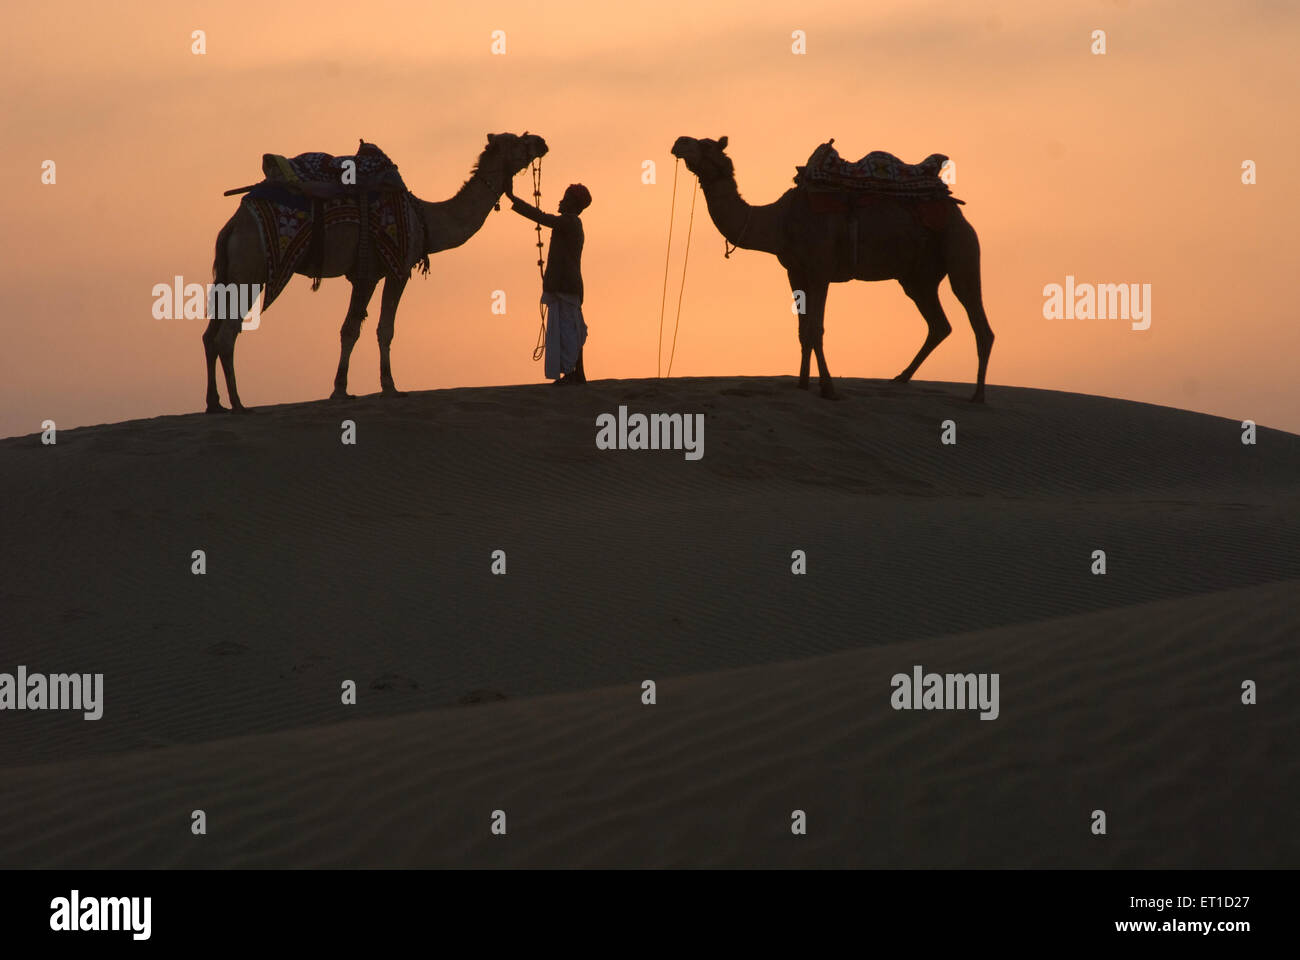 Man with camels standing on sand dune of khuhri ; Jaisalmer ; Rajasthan ; India Stock Photo